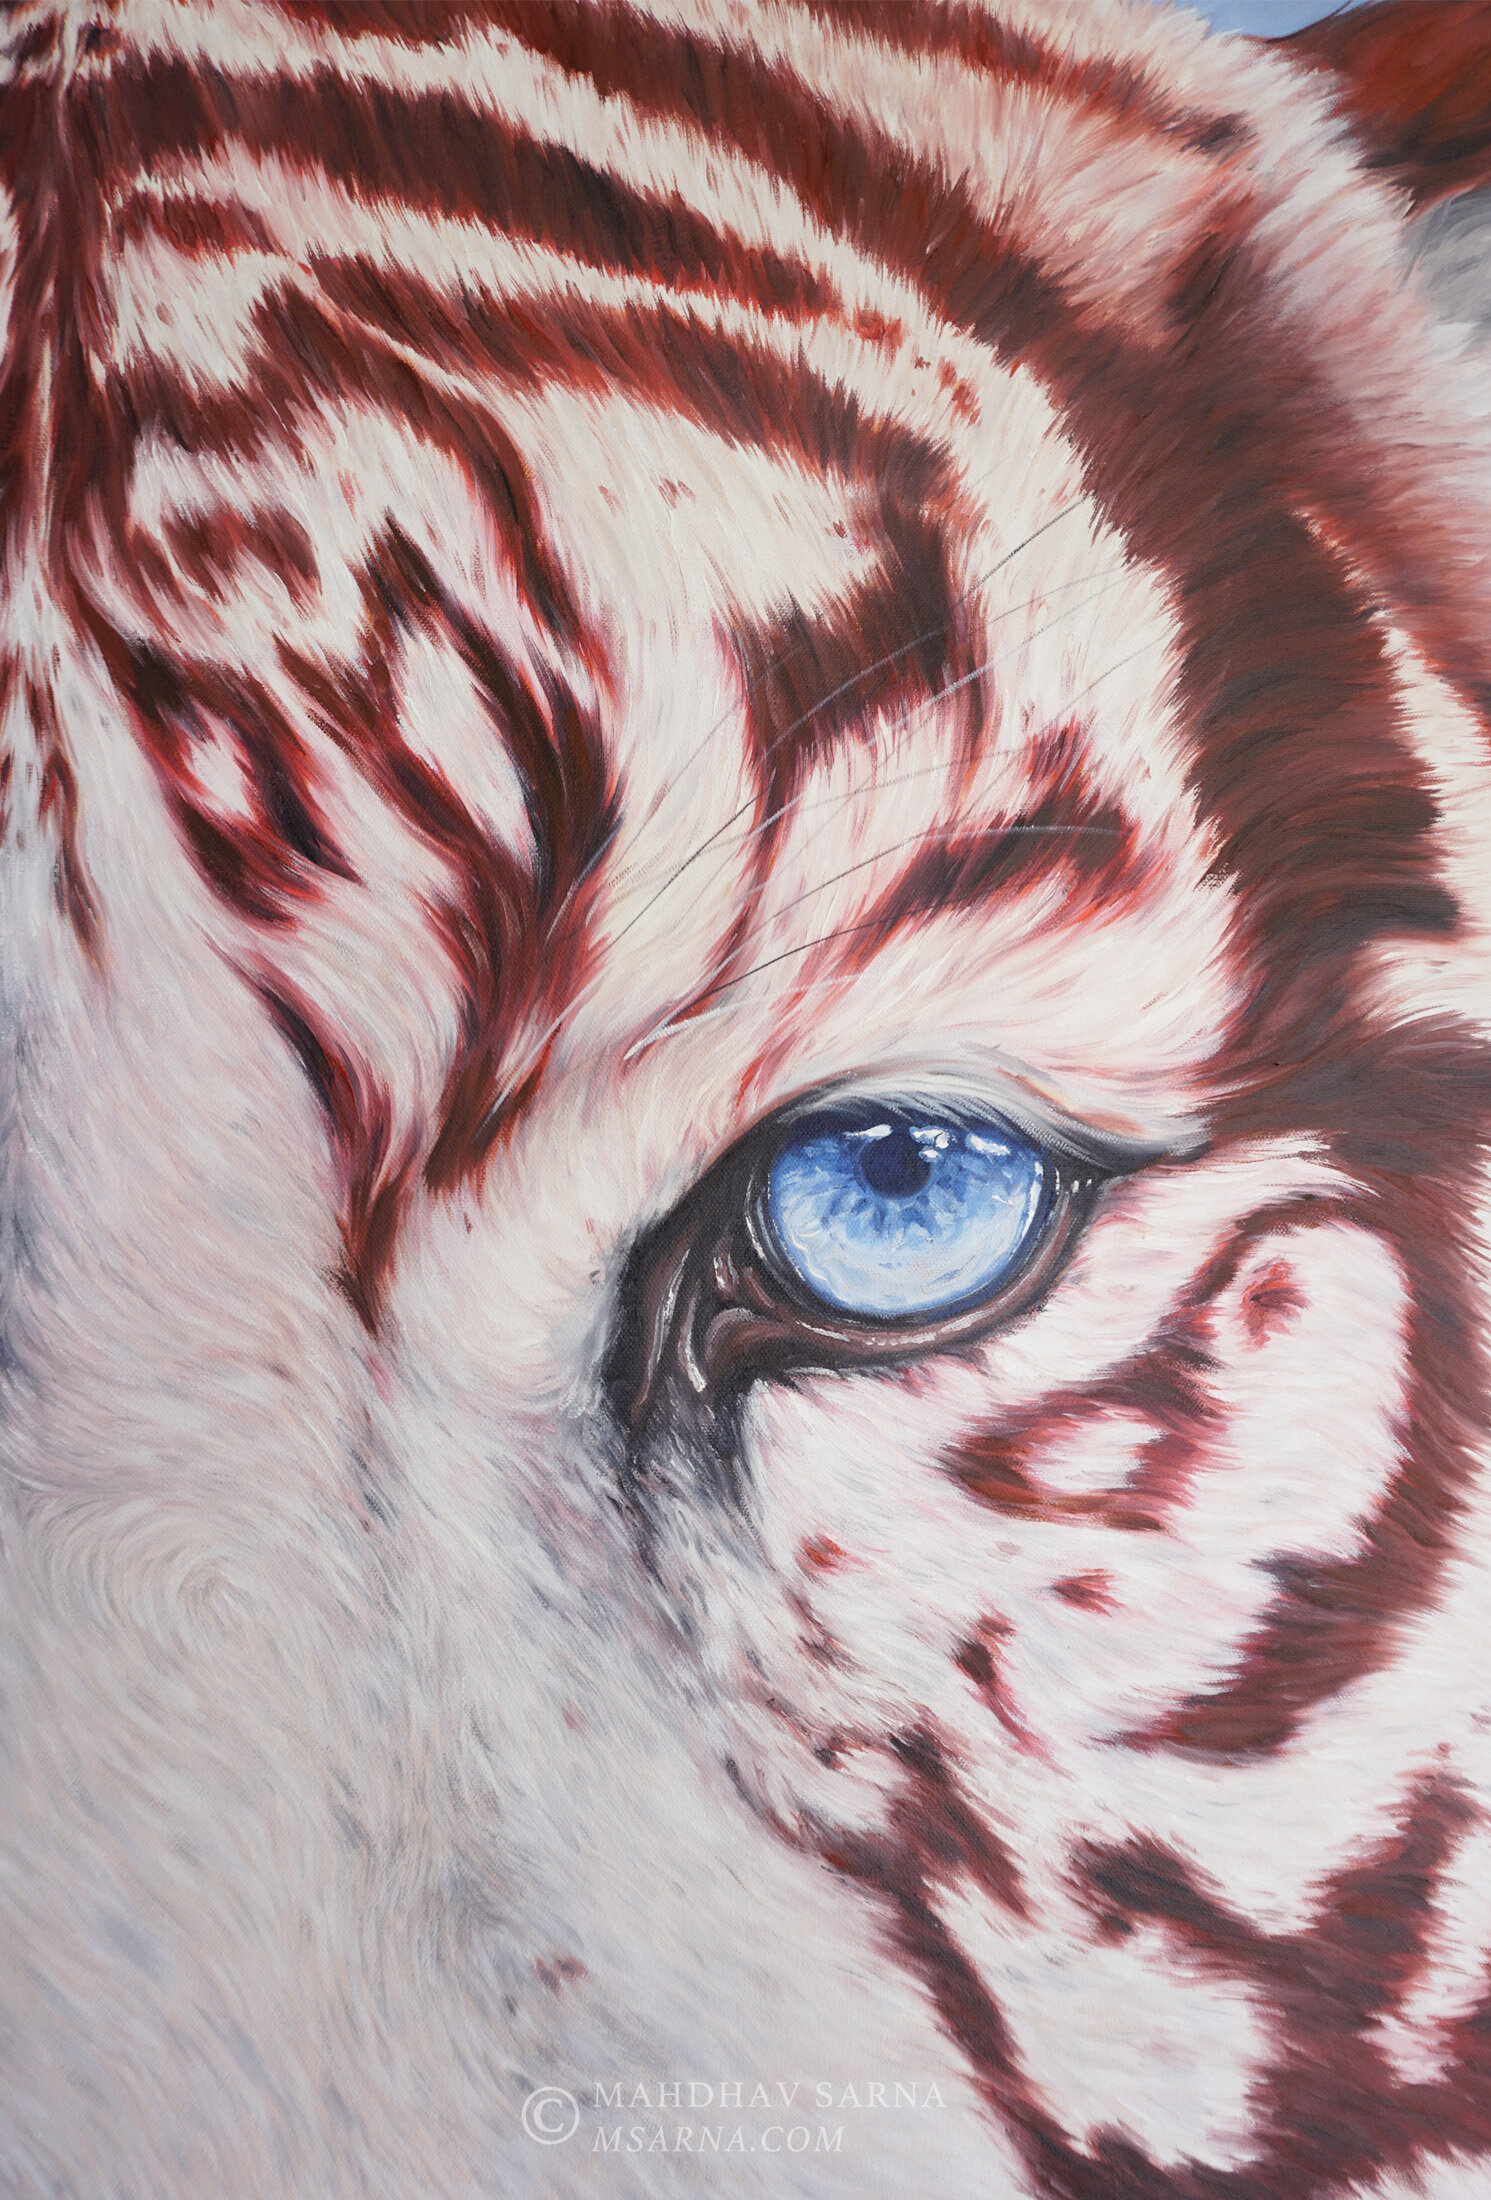 white tiger oil painting capv wildlife art mahdhav sarna 02.jpg